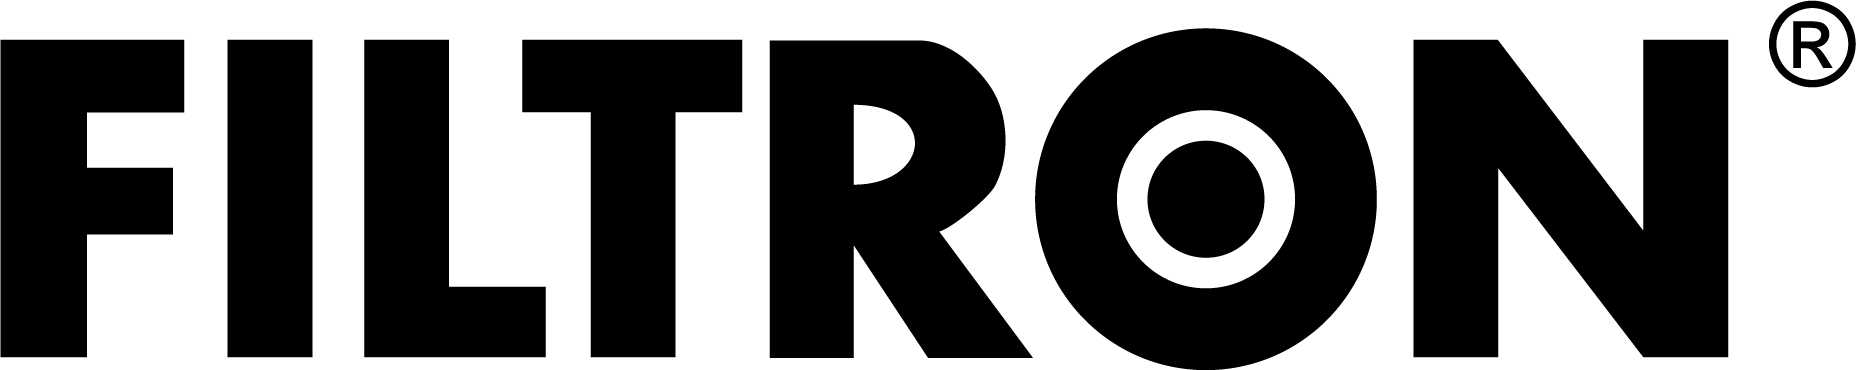 Filtron_Logo